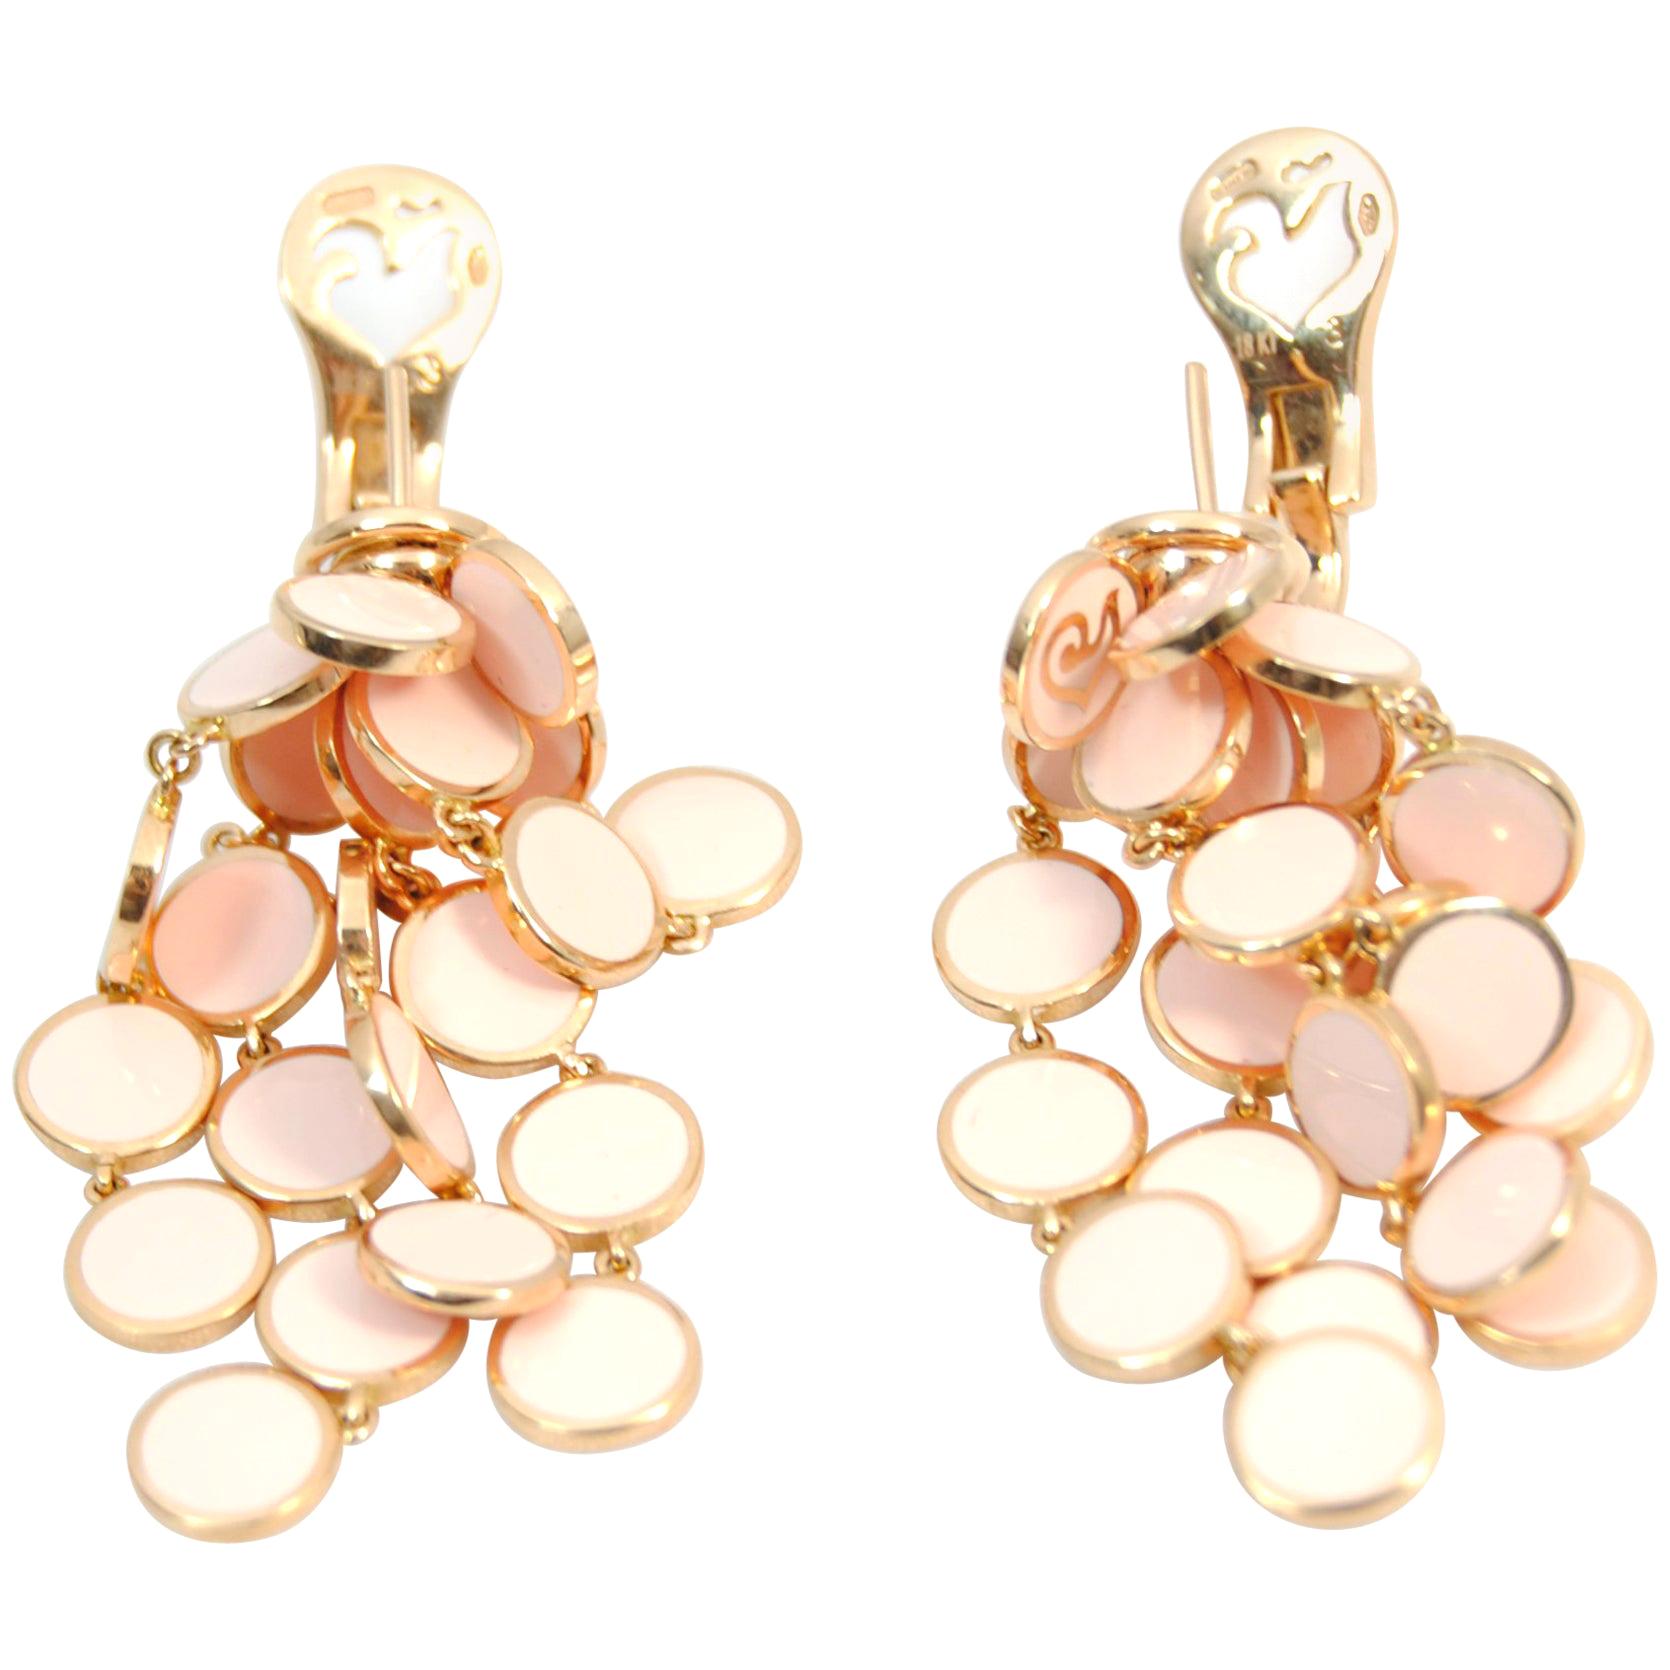 Chantecler "Pailletes" Pink Enamel petals in 18 Karat Gold Earrings